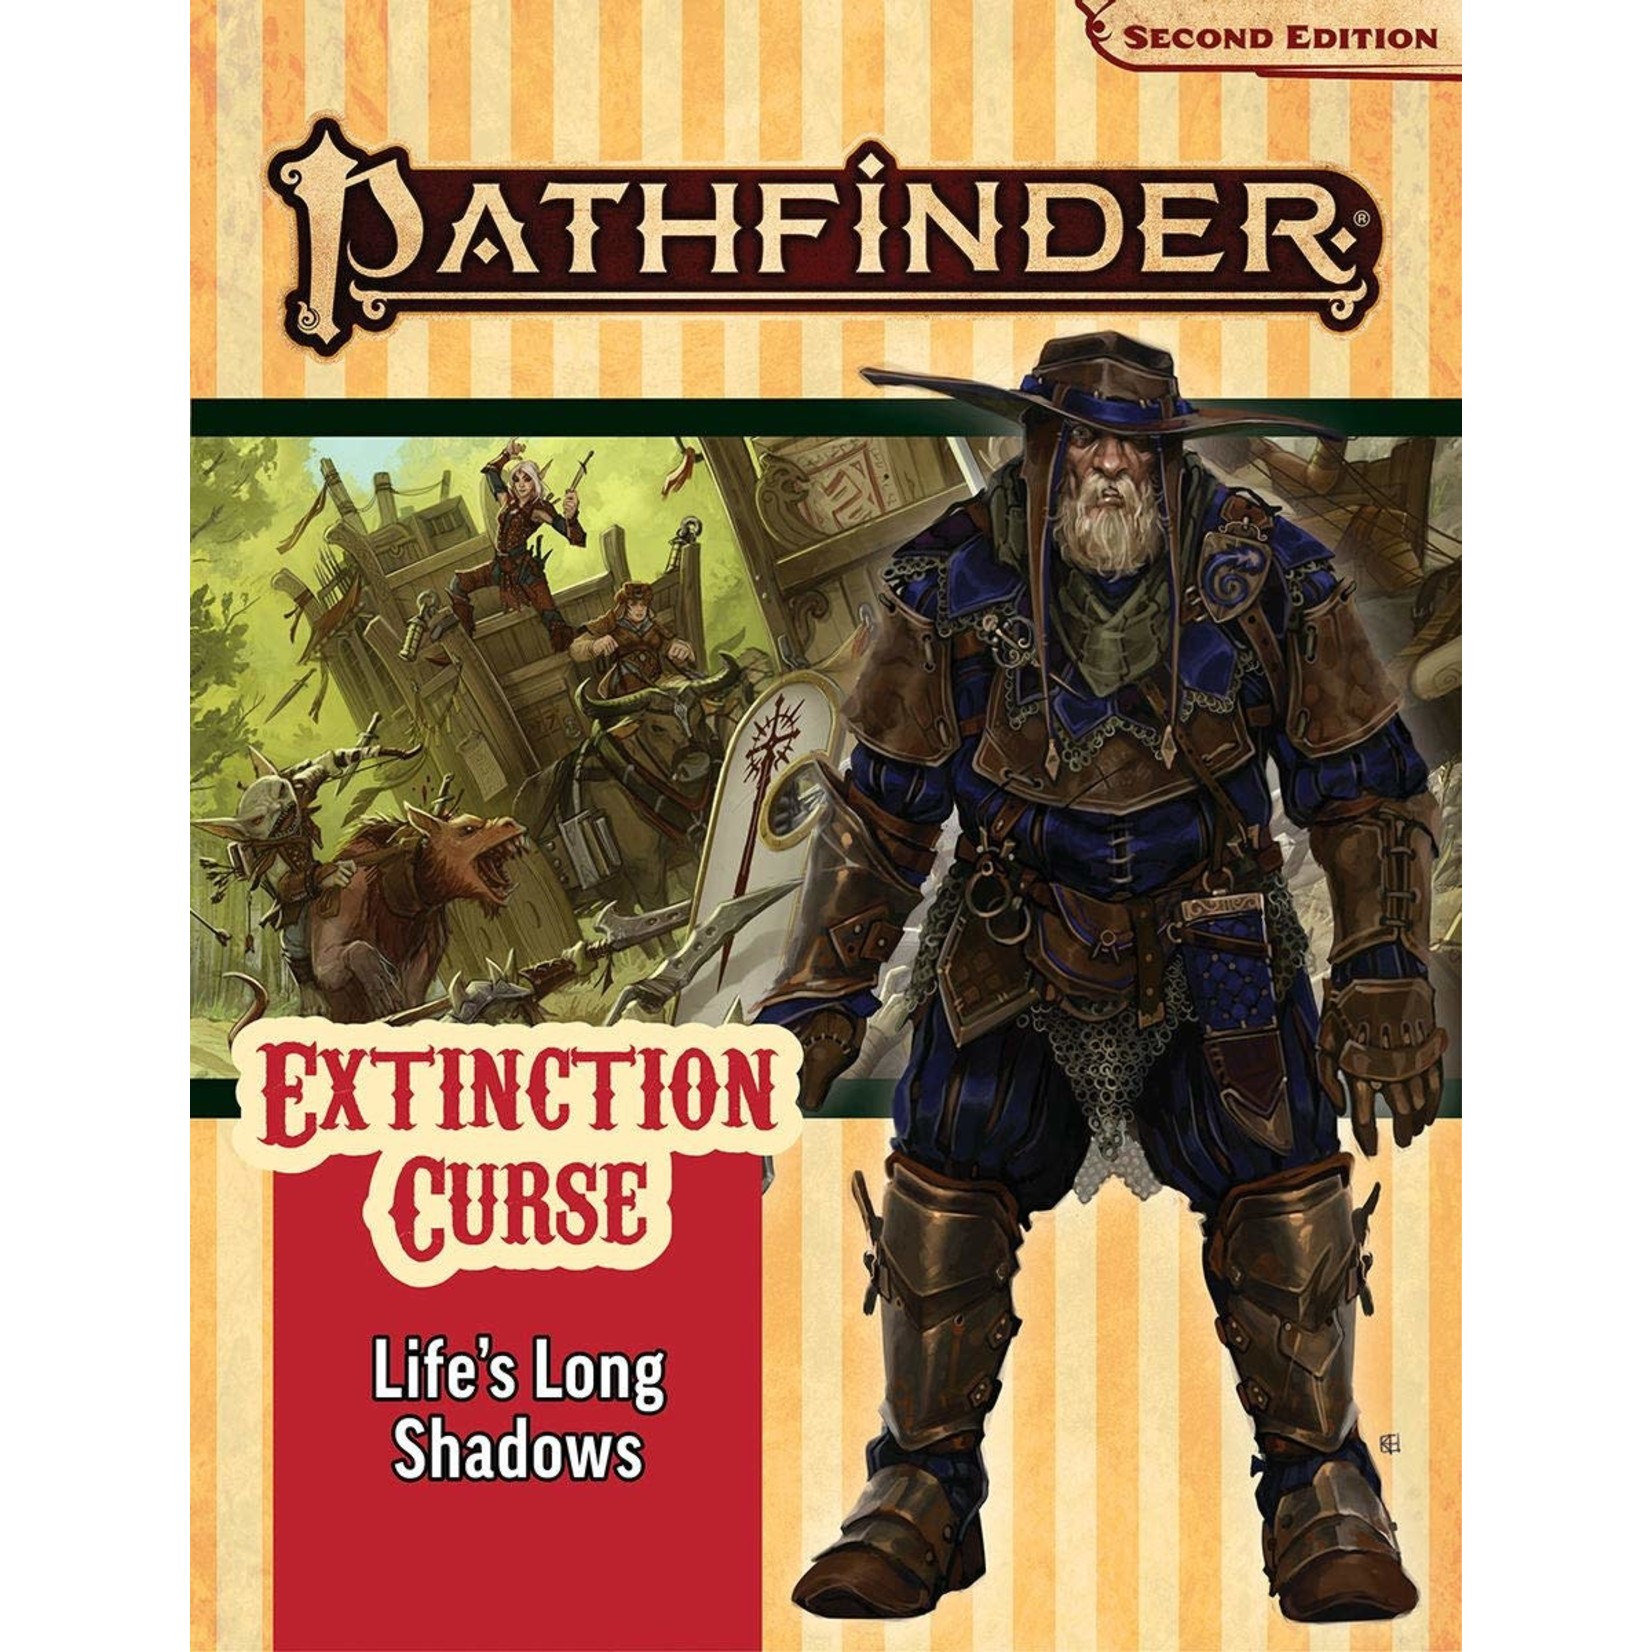 Paizo Pathfinder - Second Edition Adventure Path: Extinction Curse Part 3 - Life's Long Shadows